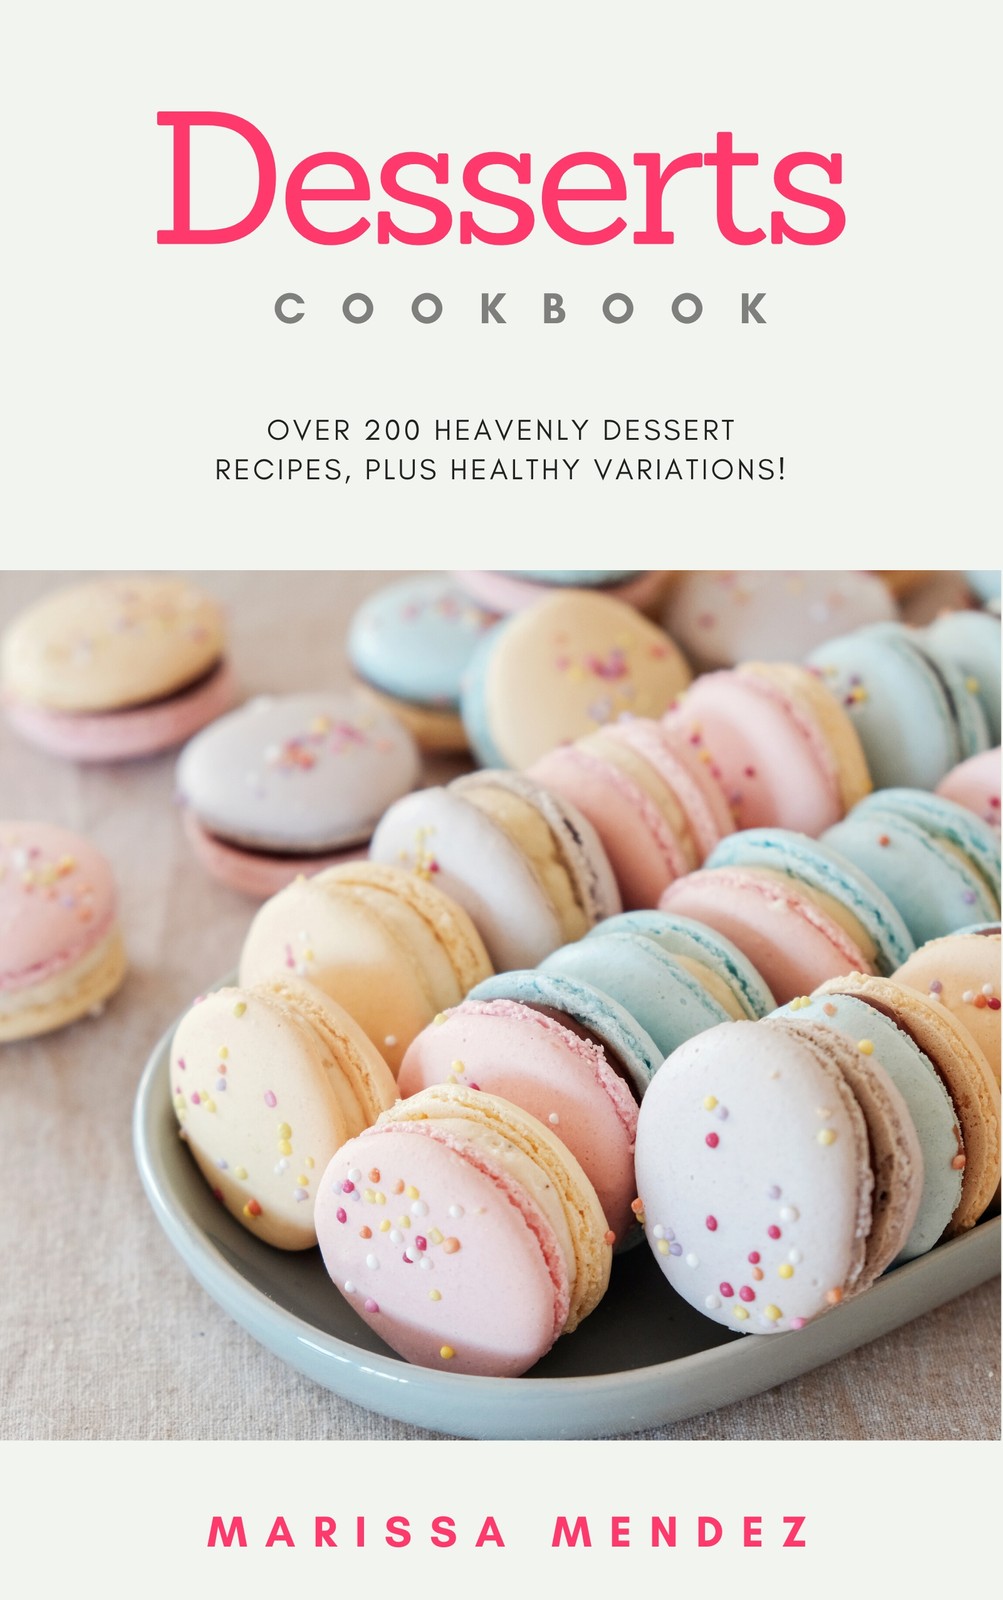 free-printable-customizable-recipe-book-cover-templates-canva